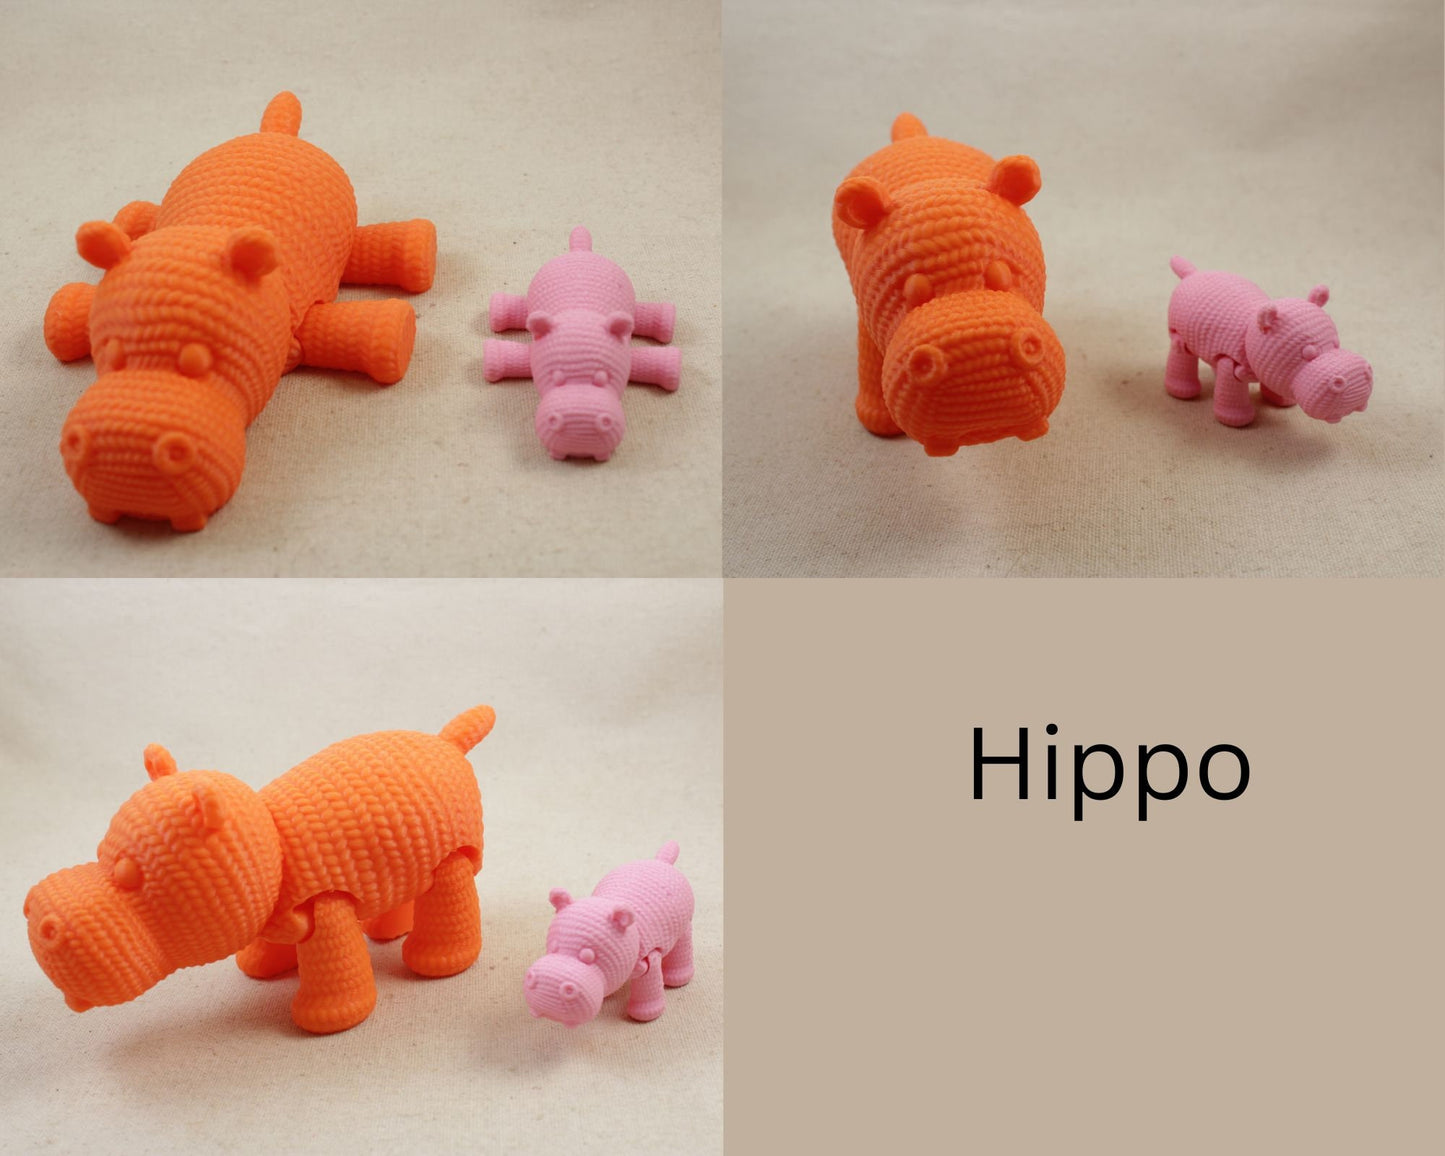 Hippopotamus 3D Printed Crochet Textured Toy